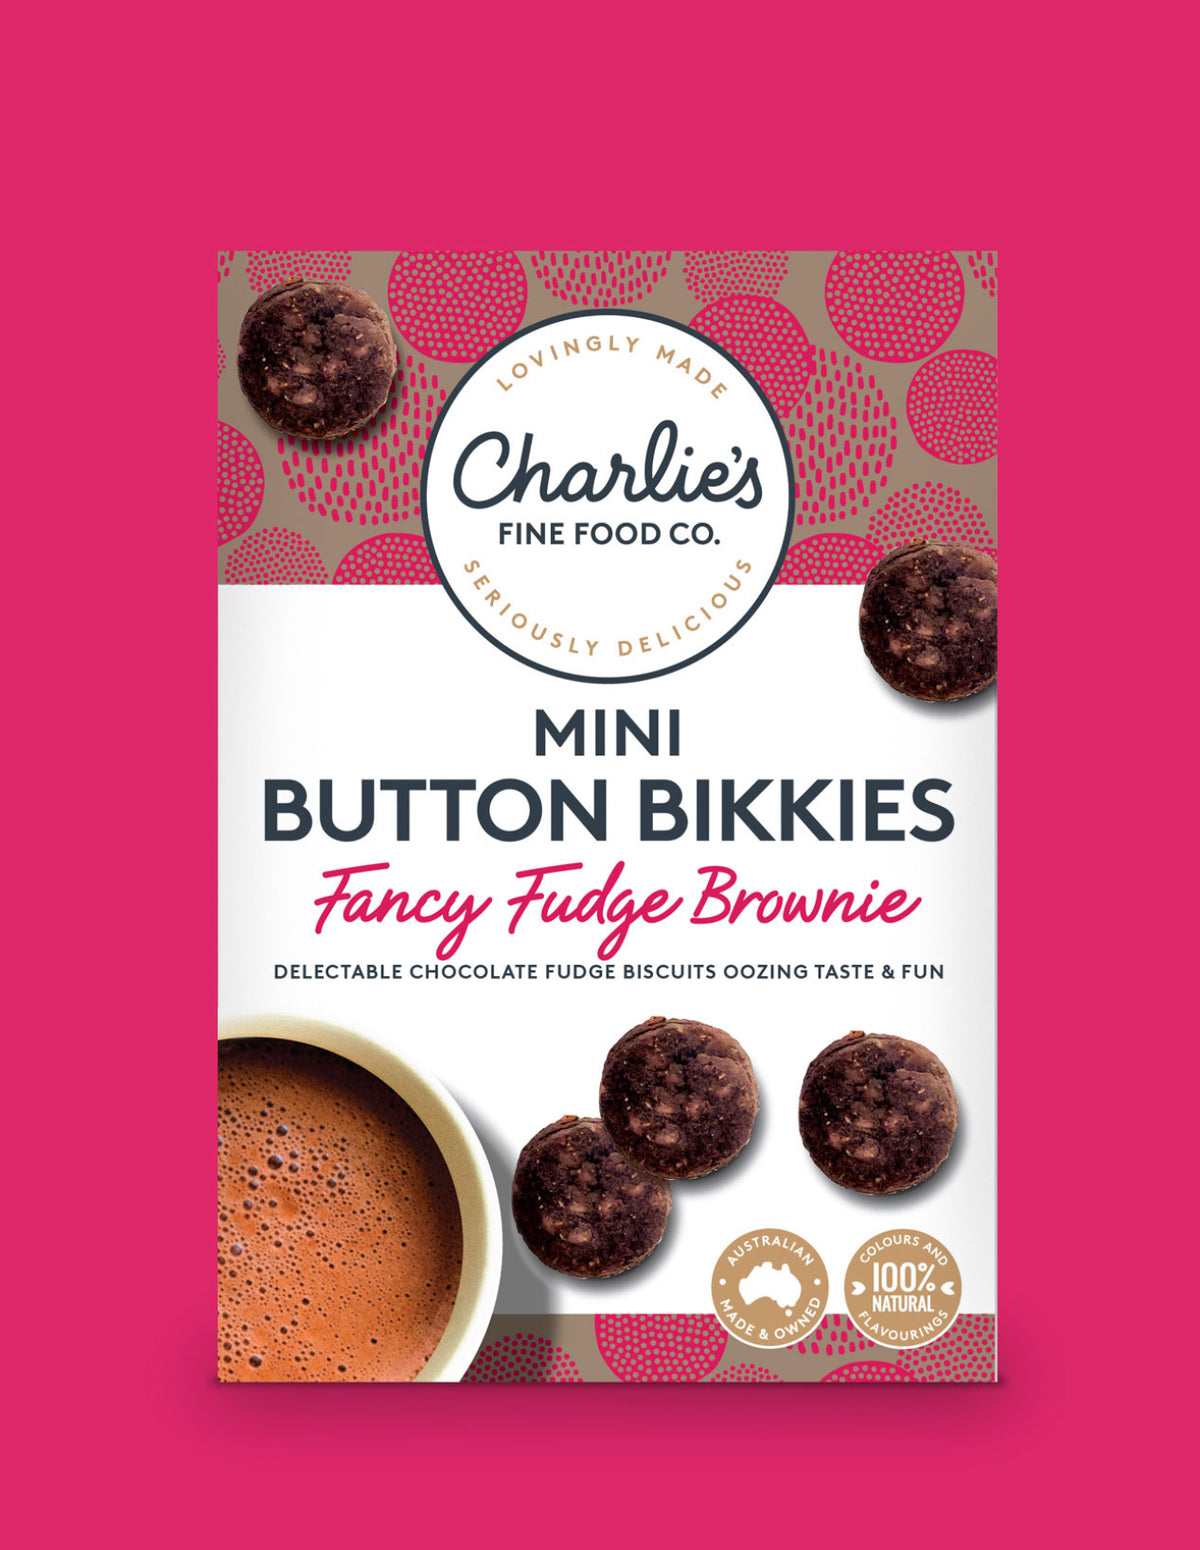 Fancy fudge brownie mini button bikkies.